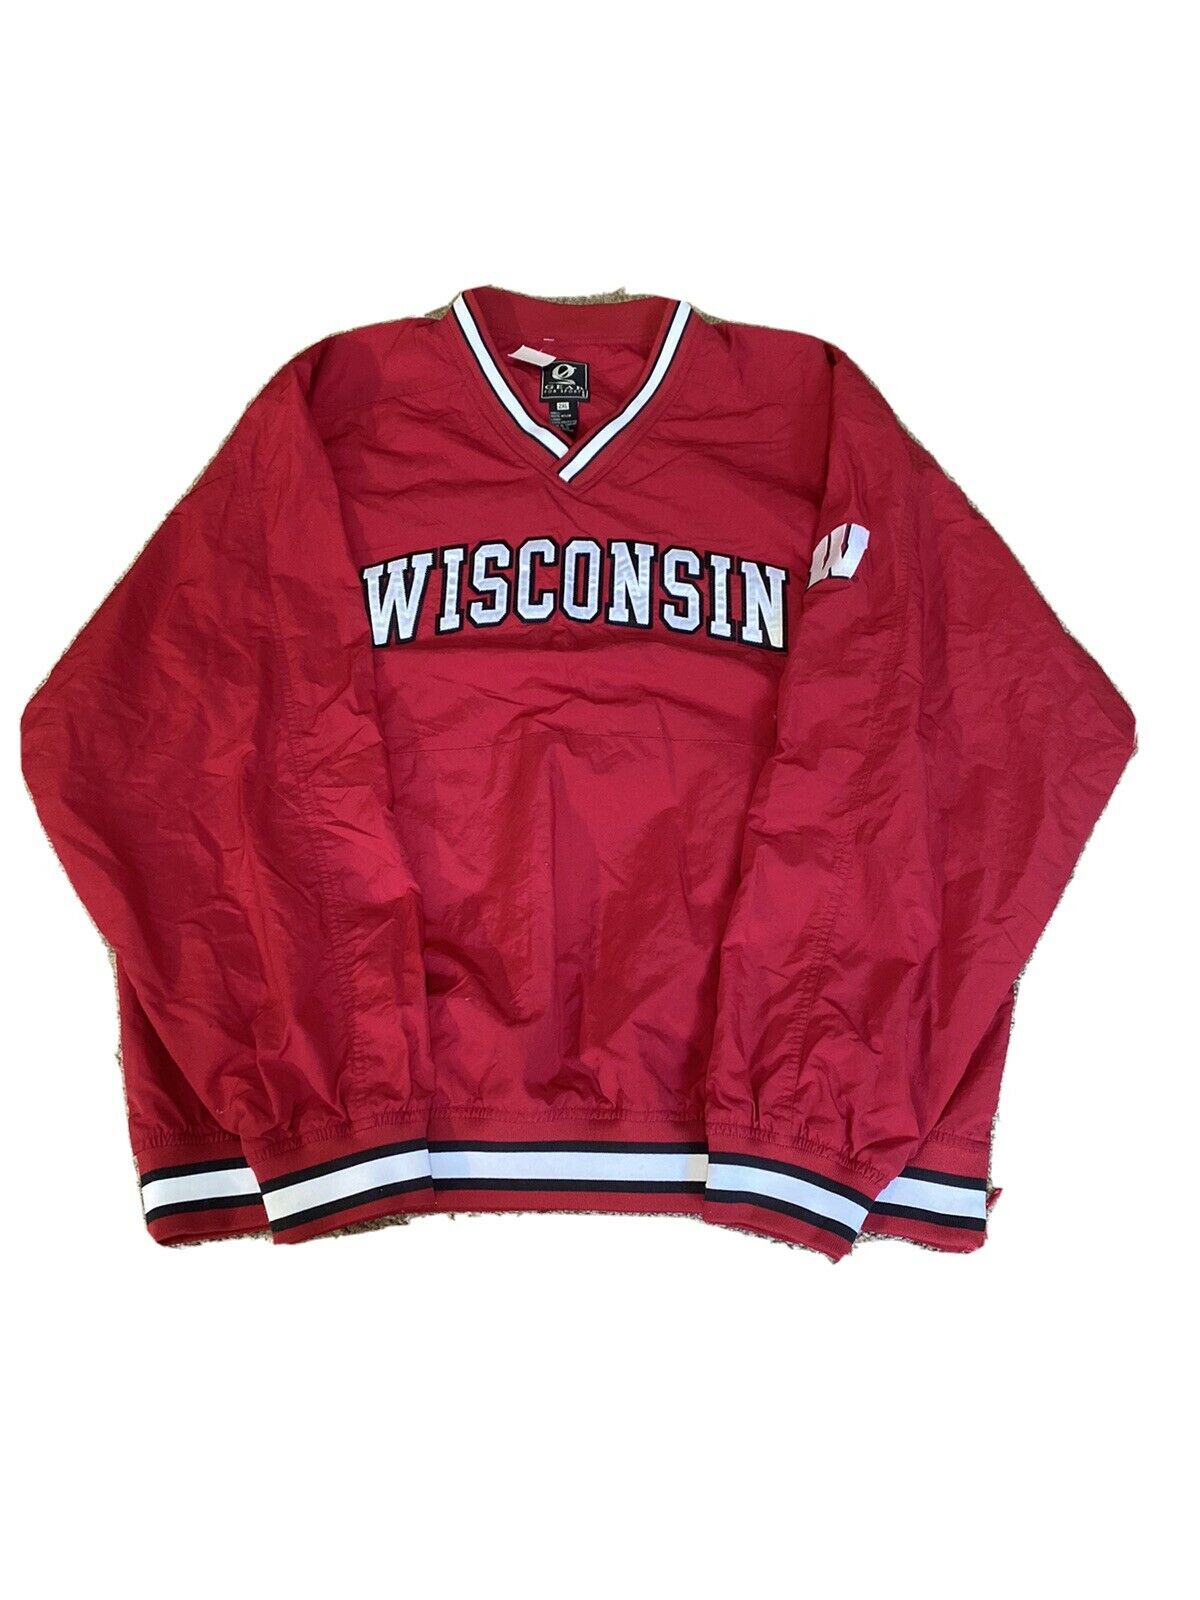 Vintage 90’s Wisconsin Red Pullover Windbreaker Jacket Xxl